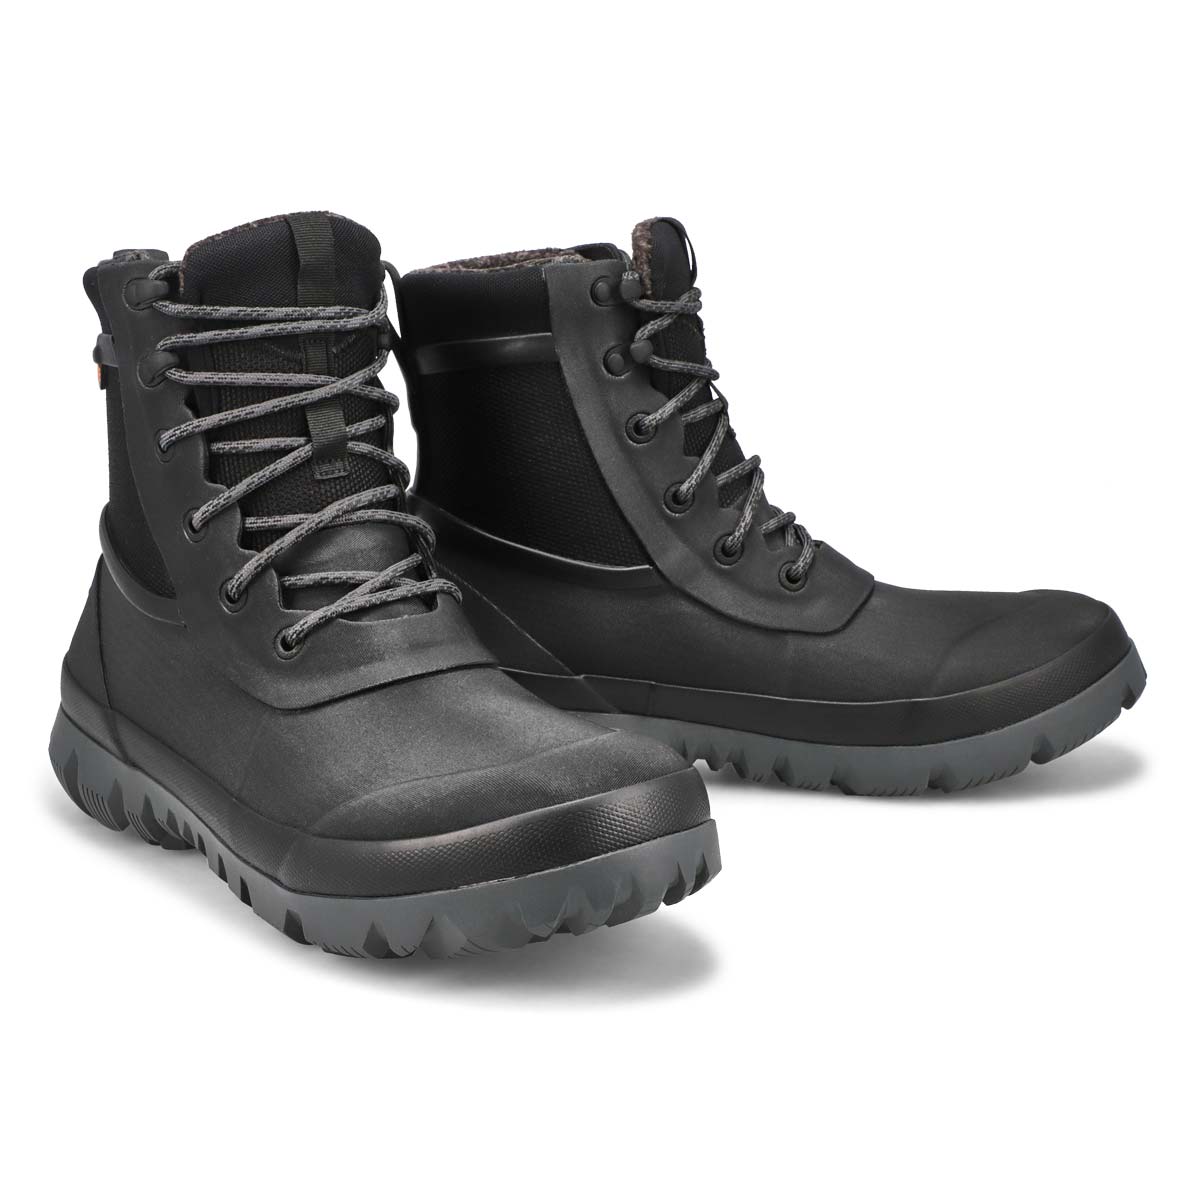 Men's Arcata Urban Waterproof Boot - Black